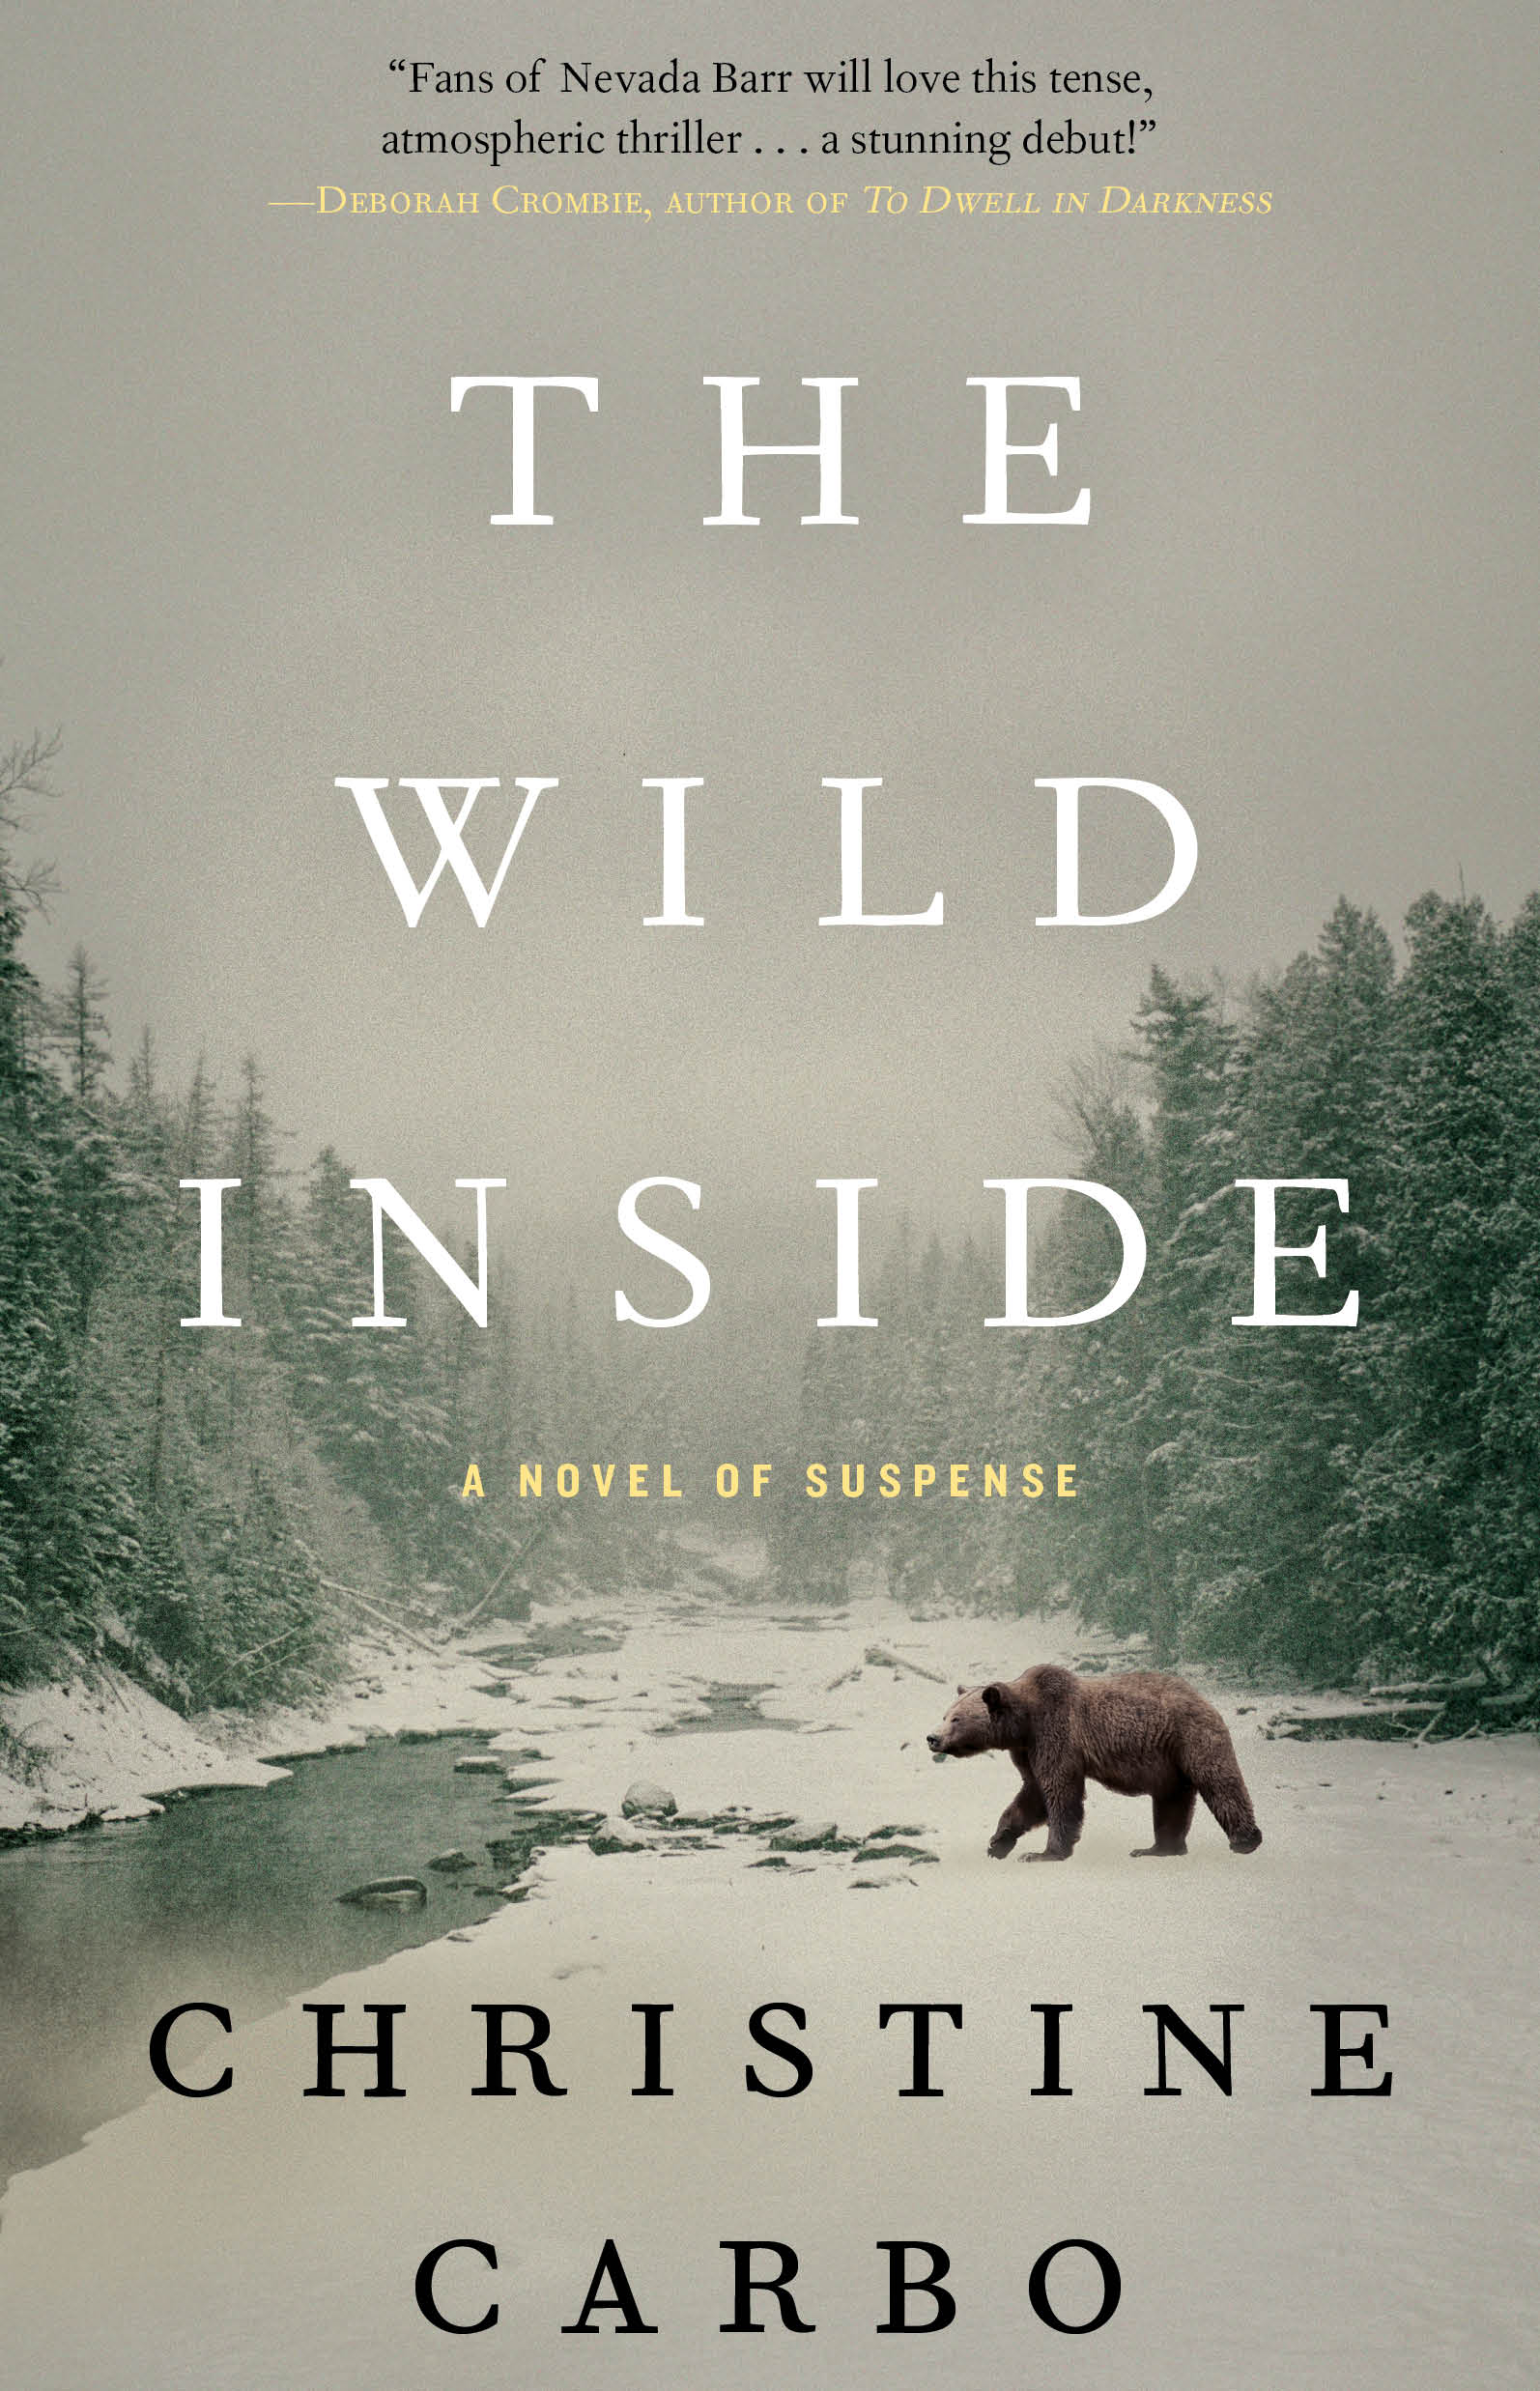 Wild Inside by Christine Carbo